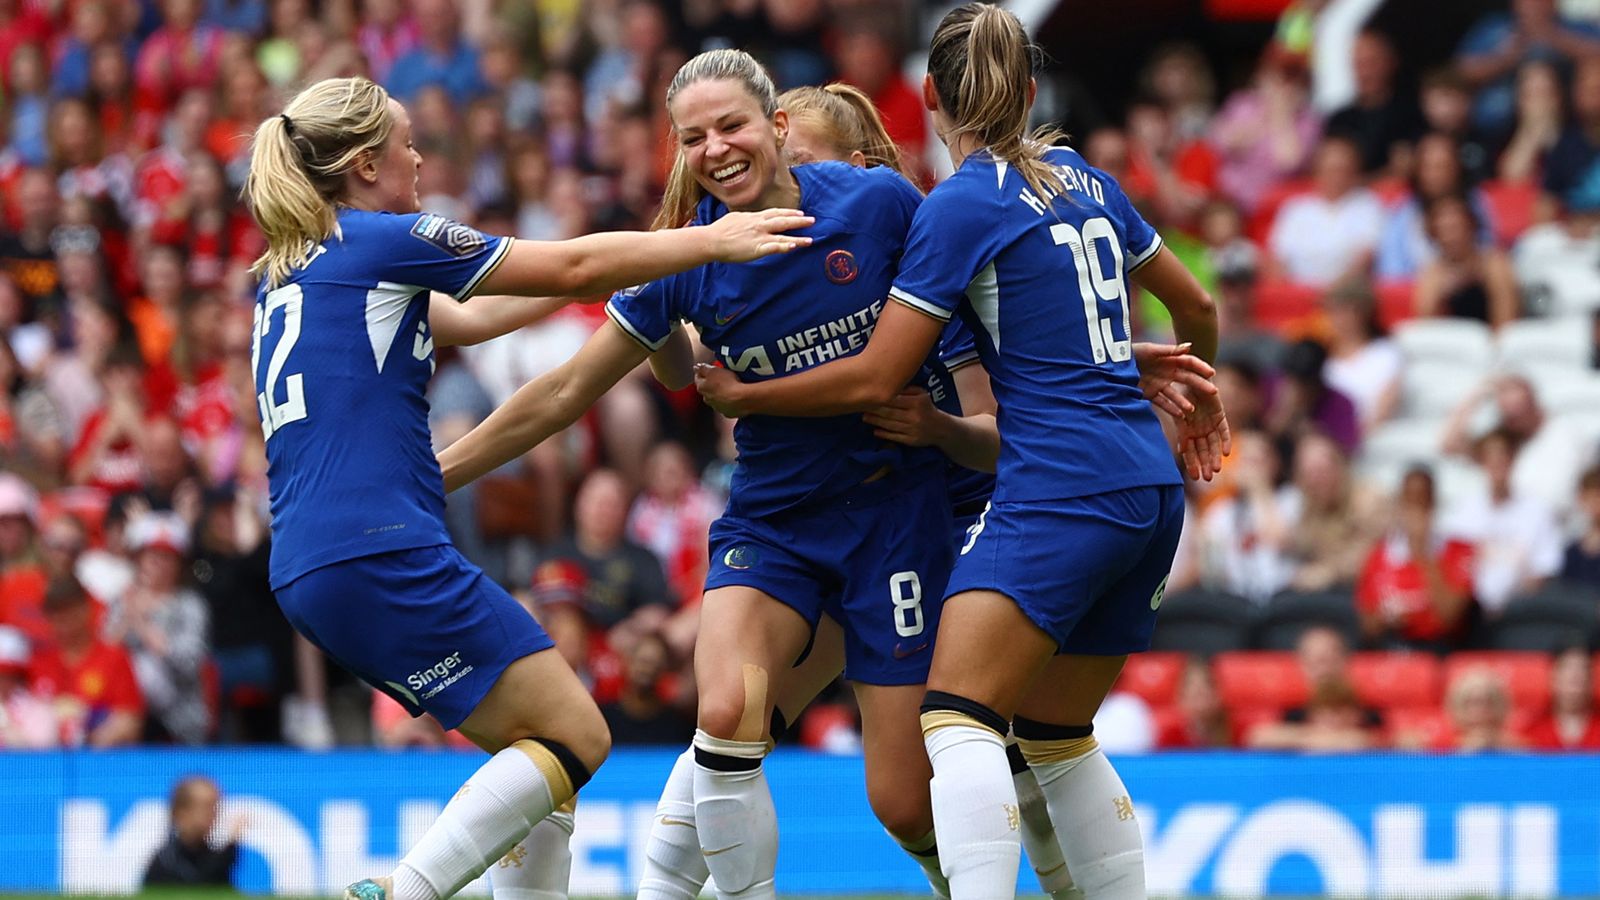 Chelsea win Women's Super League after beating Man Utd 6-0 in Hayes' last match